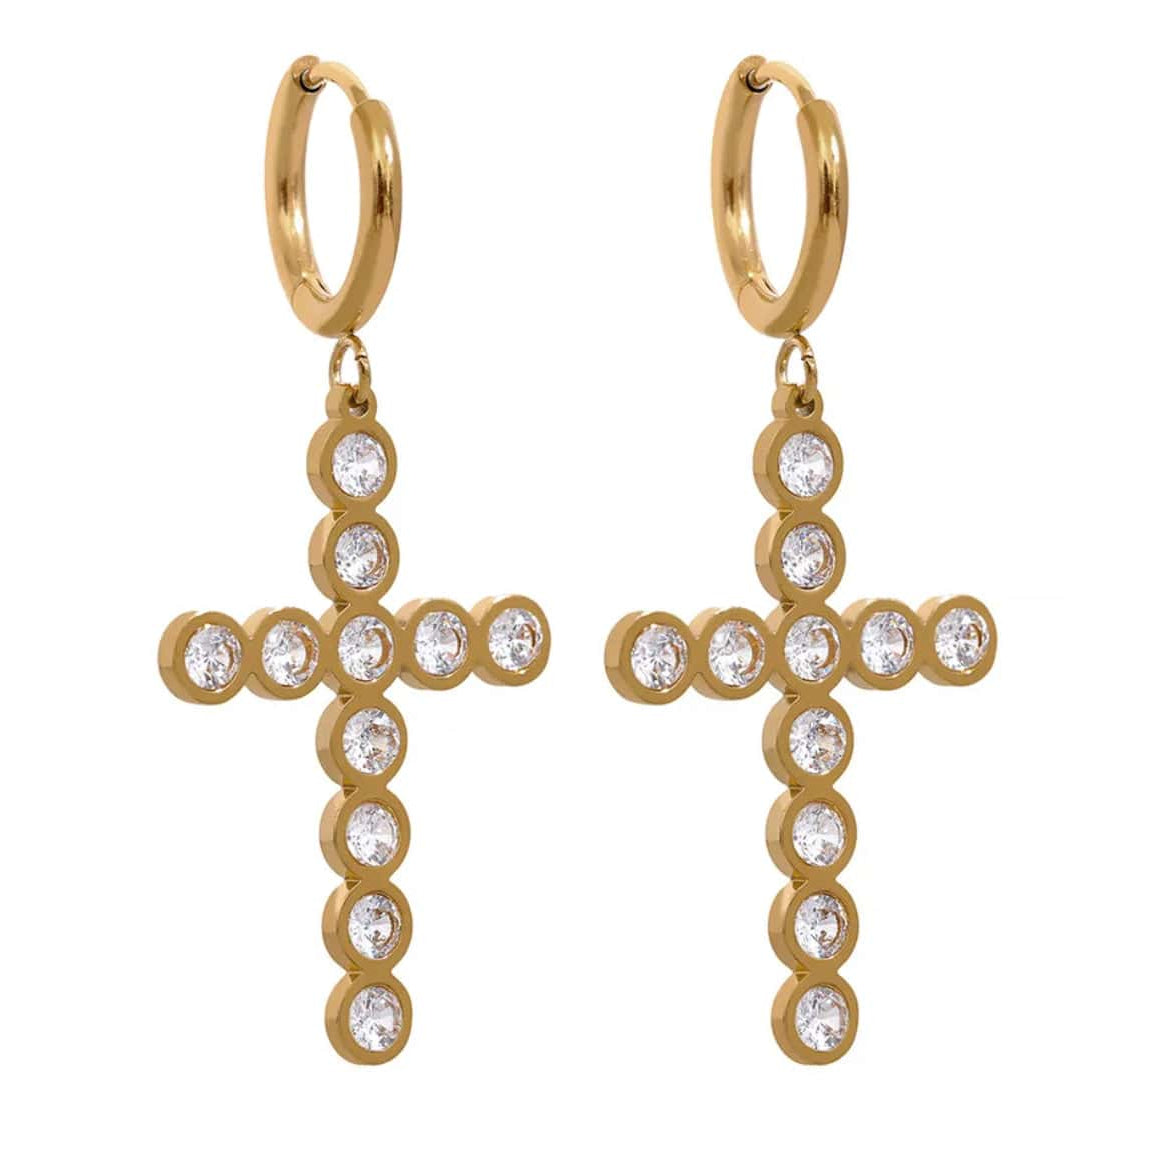 Stainless steel Gold Maxi Cross Earrings